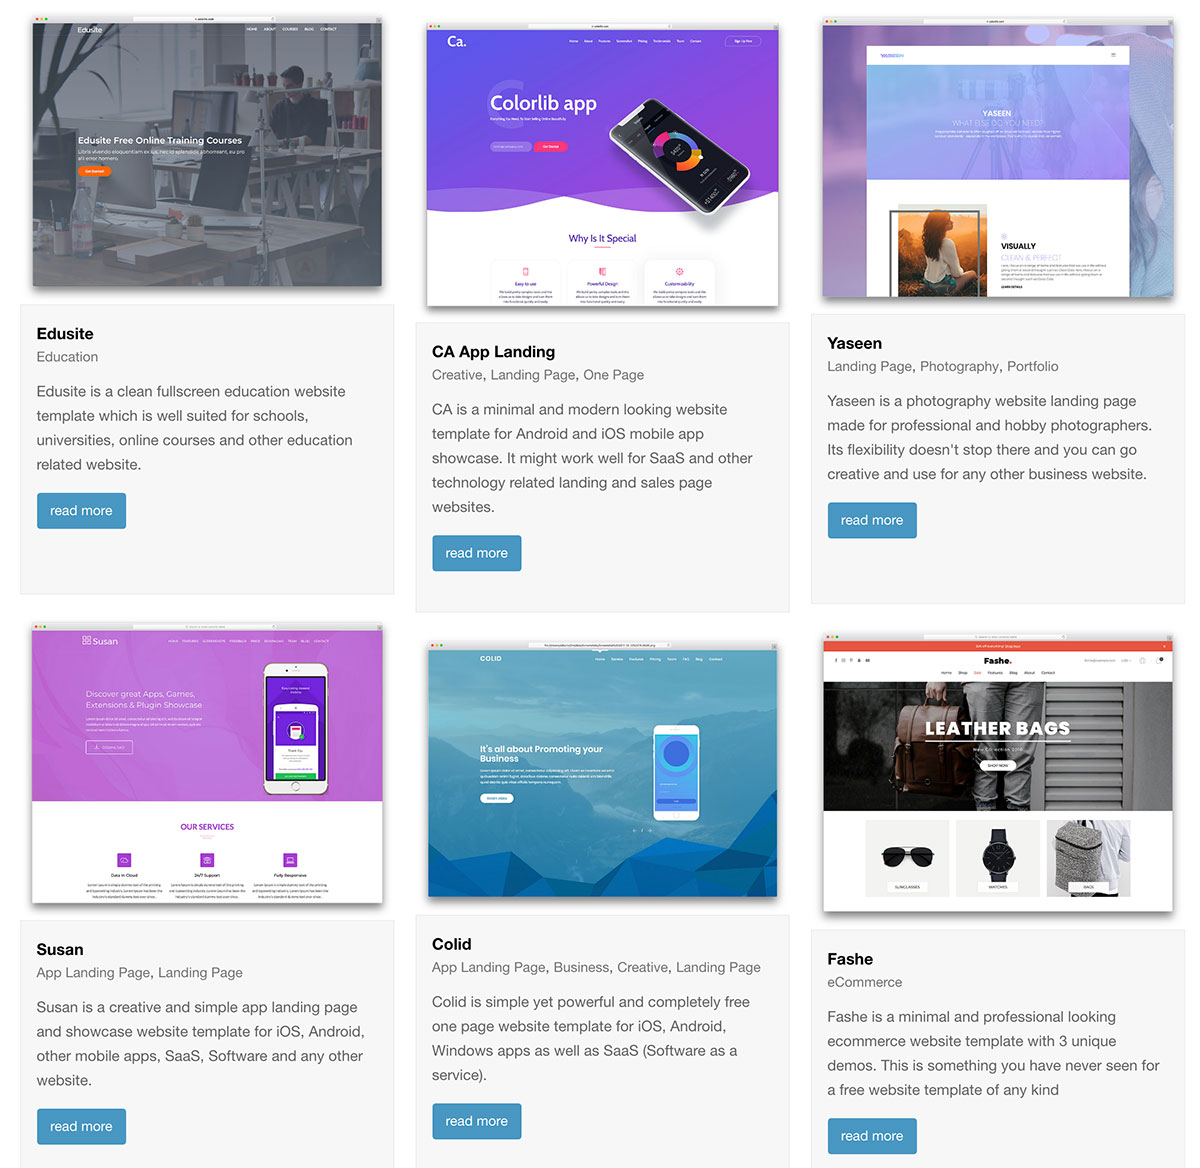 Free Responsive Website Templates Bootstrap 4 Best Design Idea